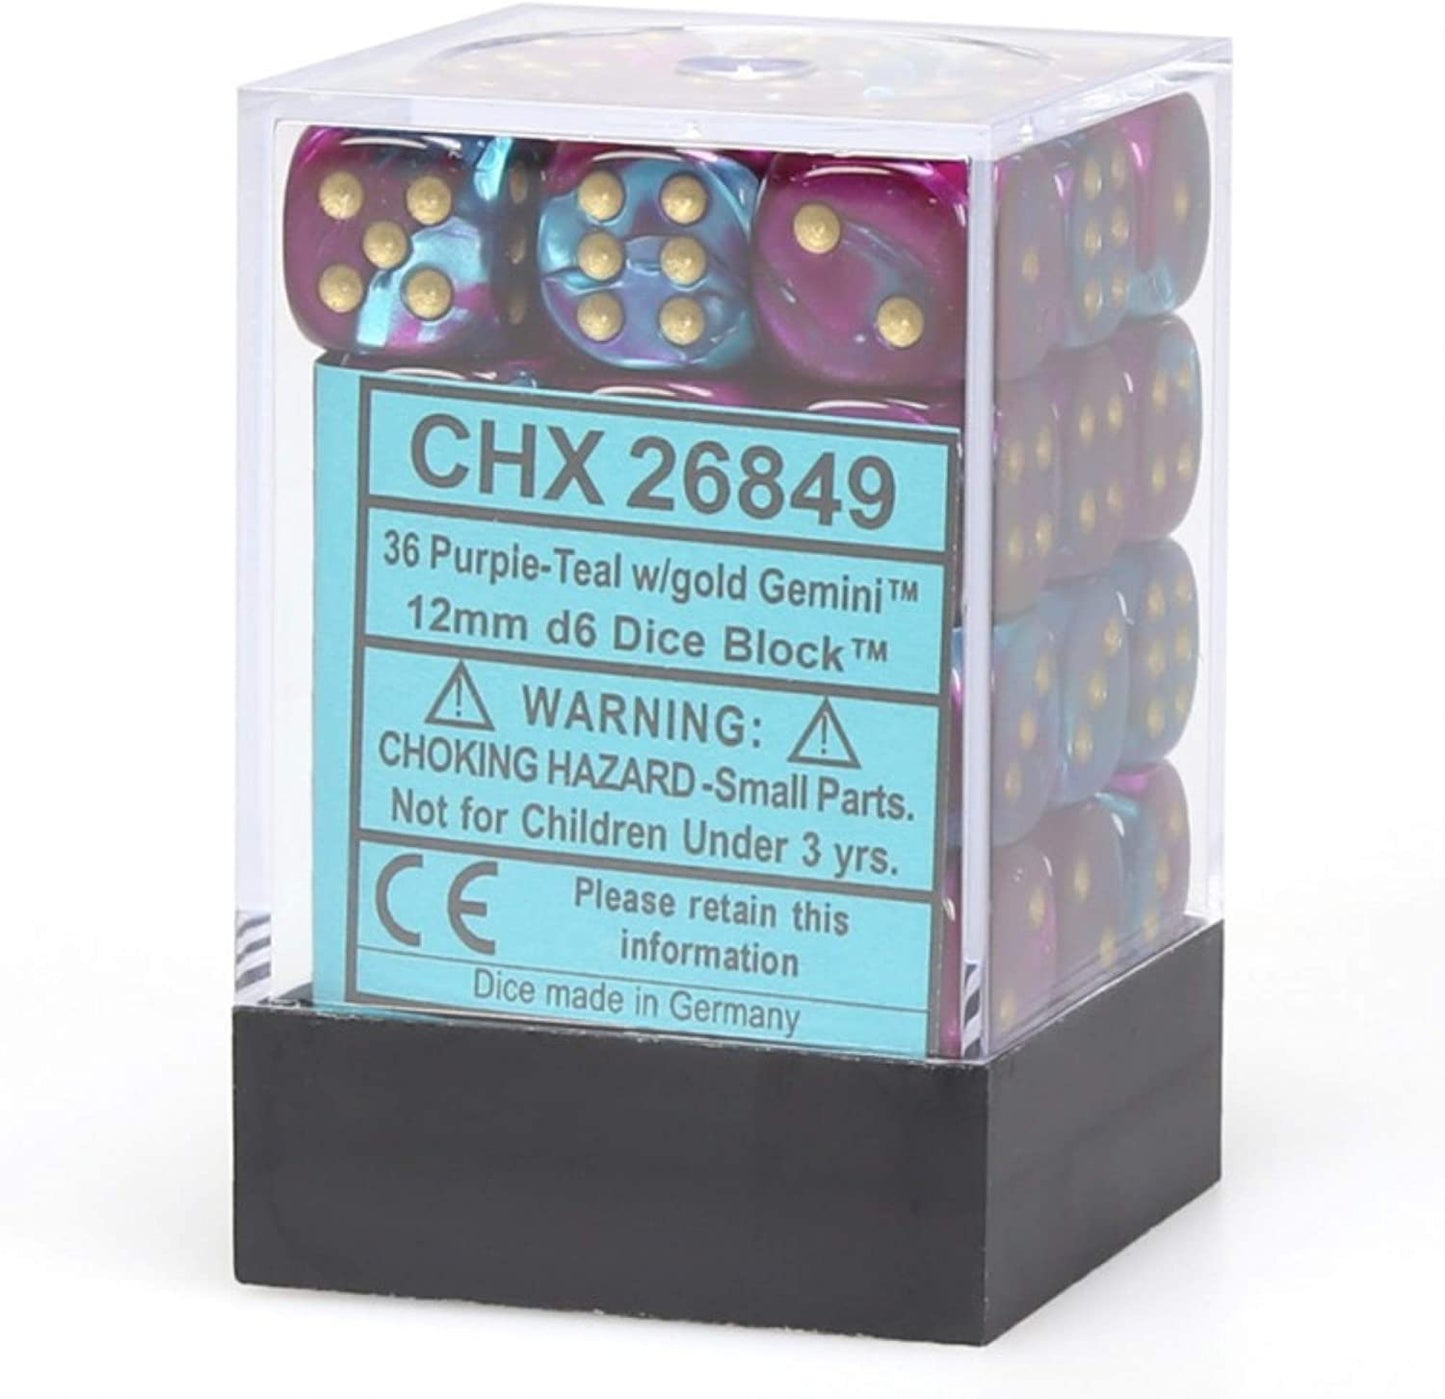 Chessex Dice: D6 Block 12mm - Gemini - Purple-Teal with Gold (CHX 26849) - Gamescape